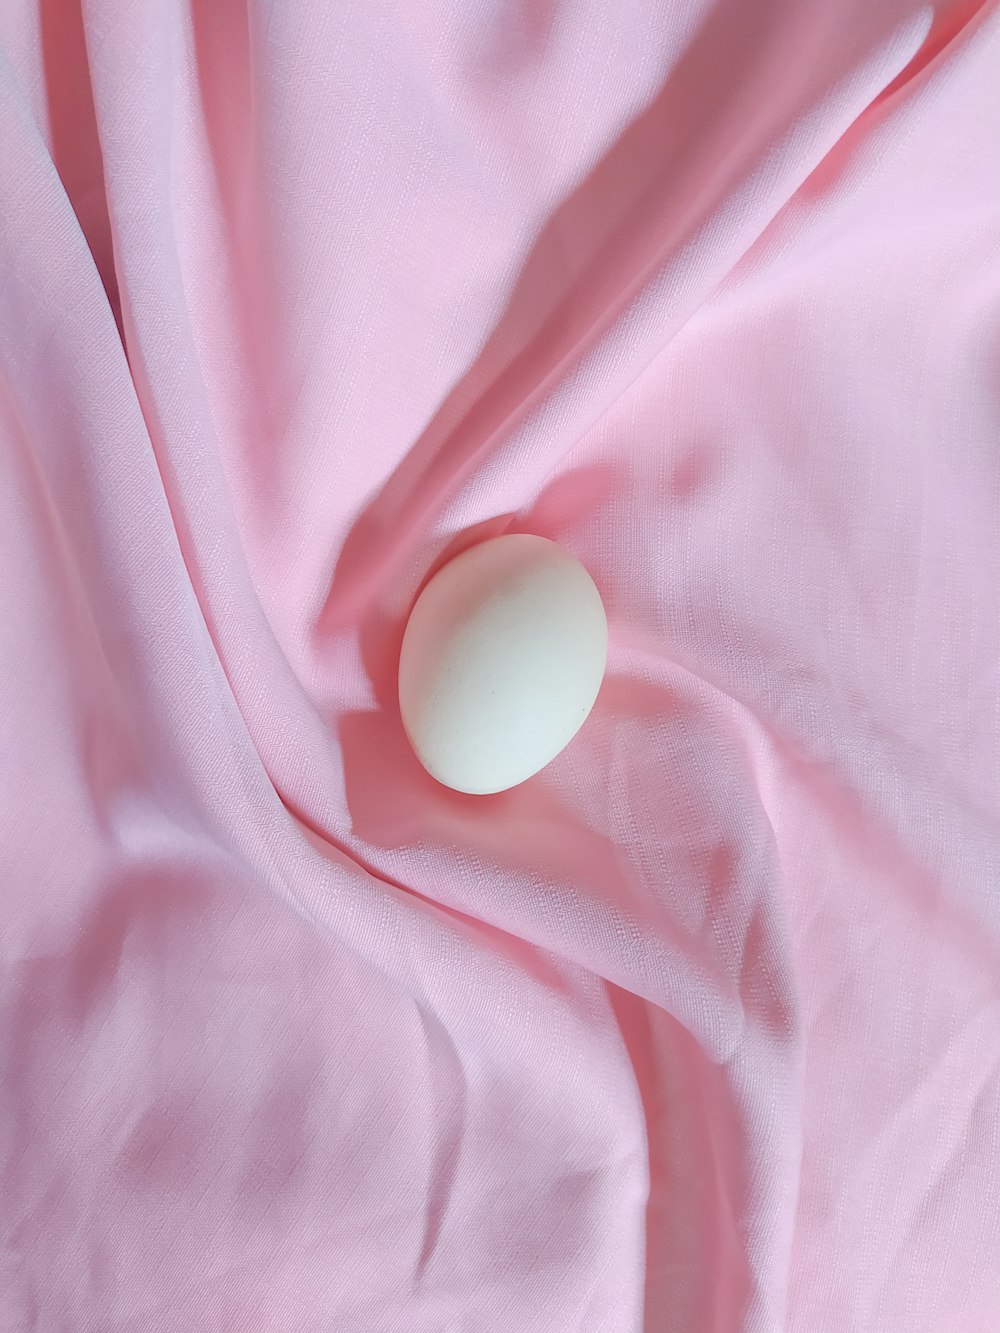 white egg on pink textile